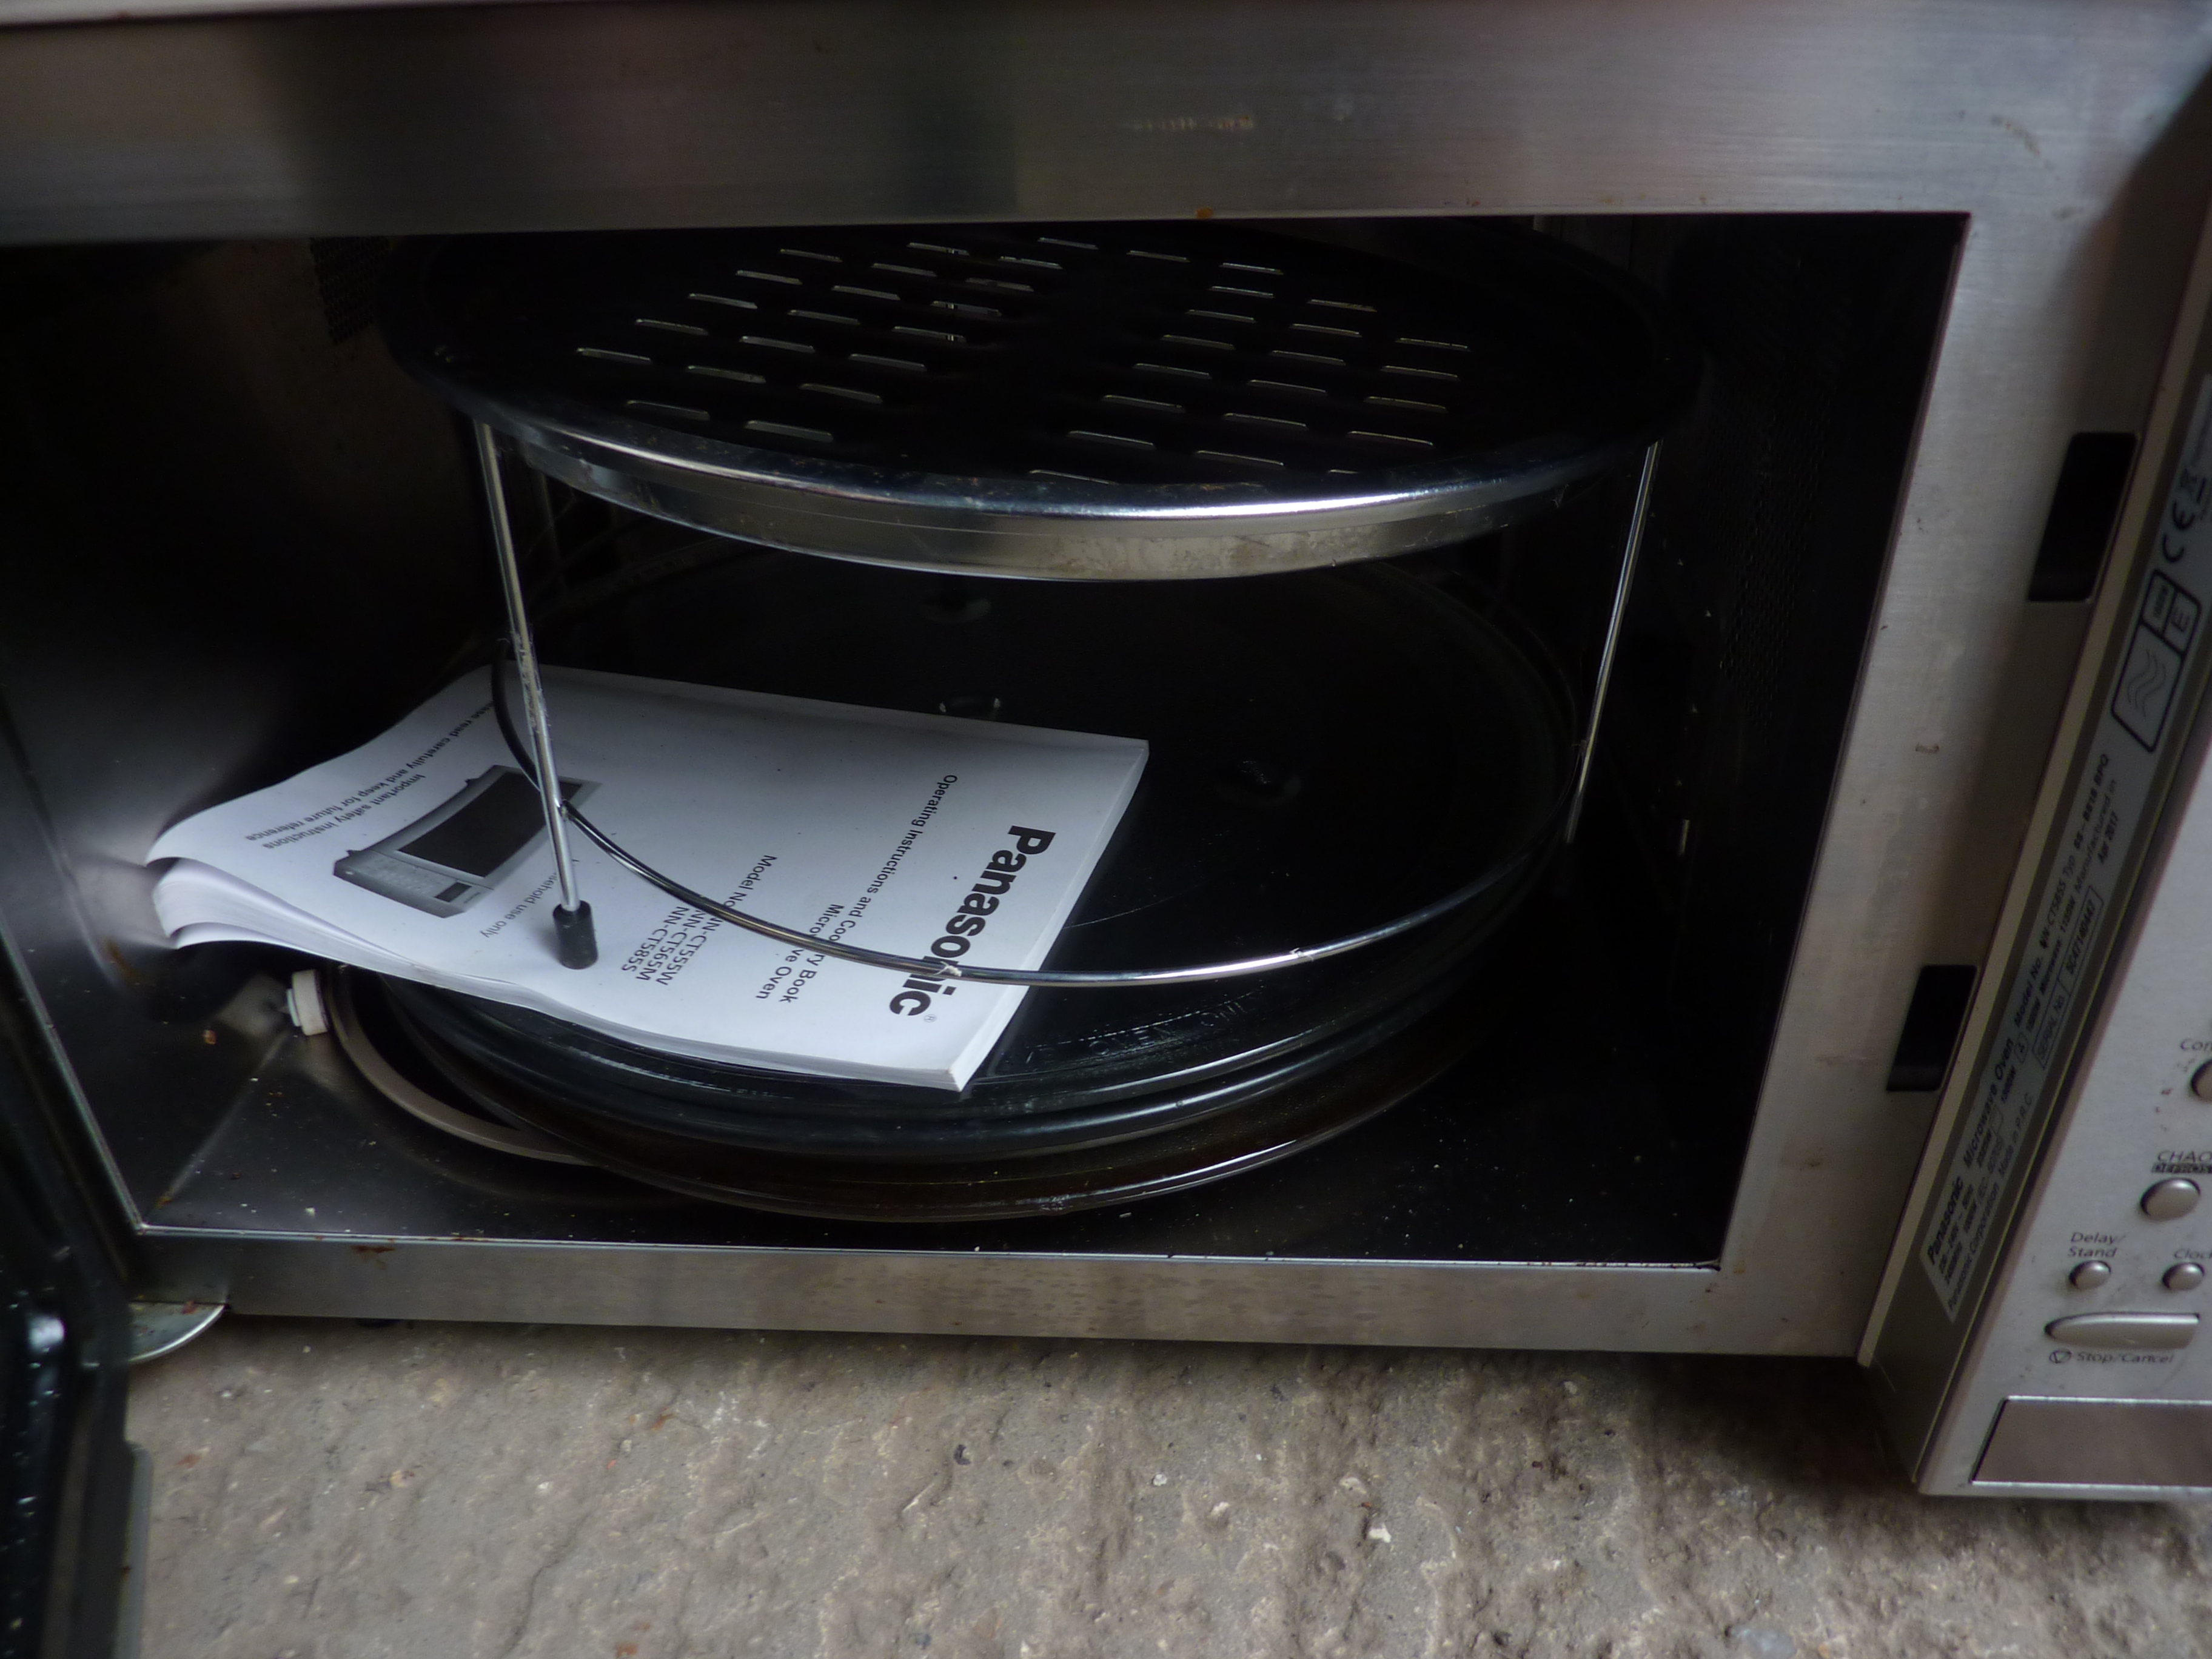 Panasonic MN-CT585S microwave oven - Image 2 of 2